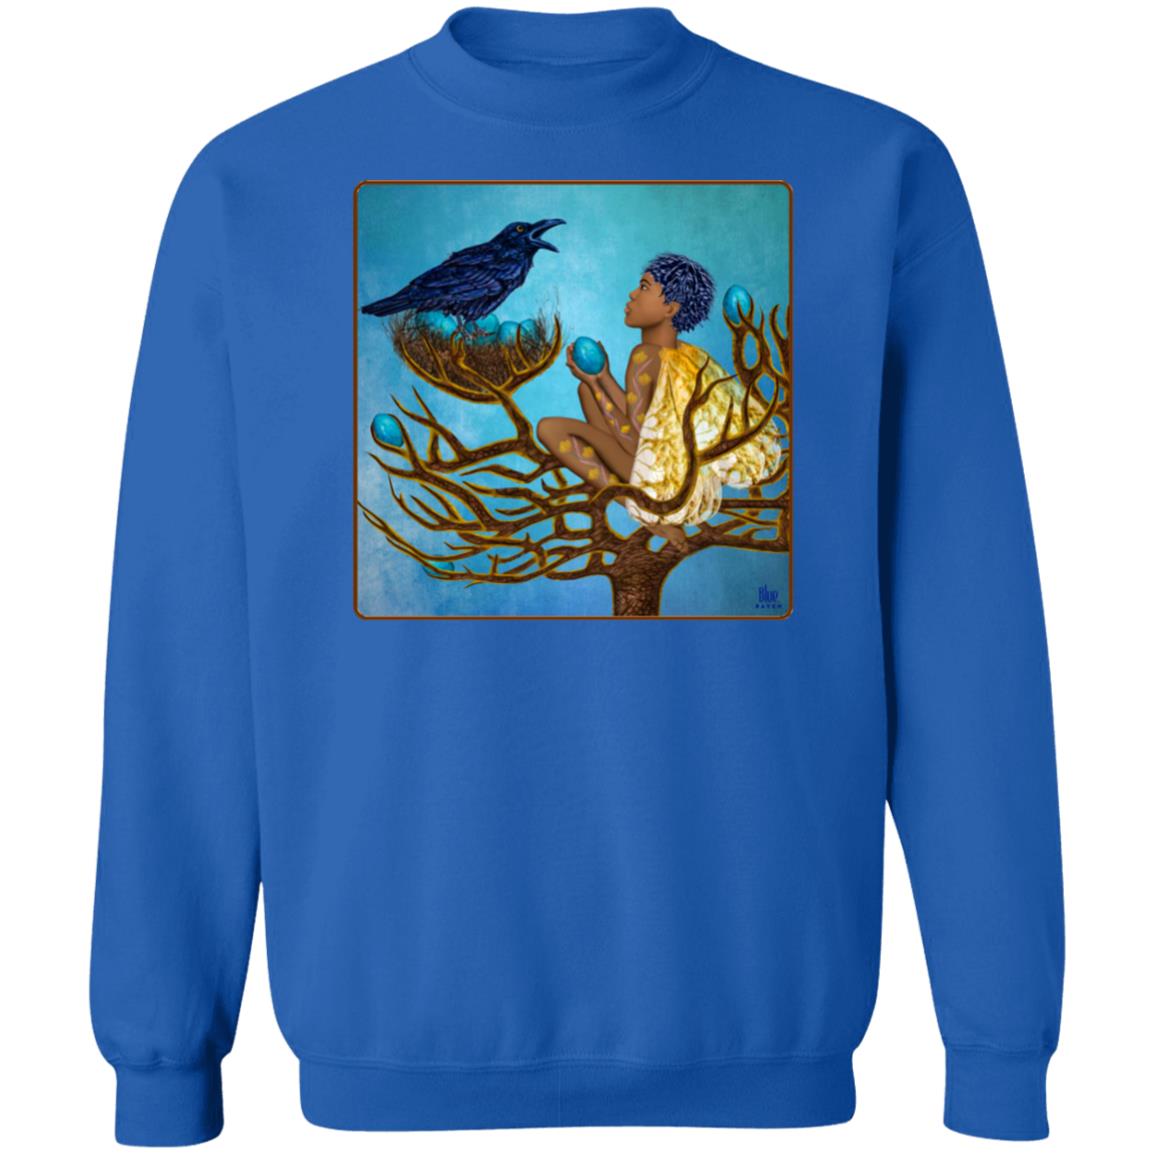 The Blue Raven's Friend - Unisex Crew Neck Sweatshirt